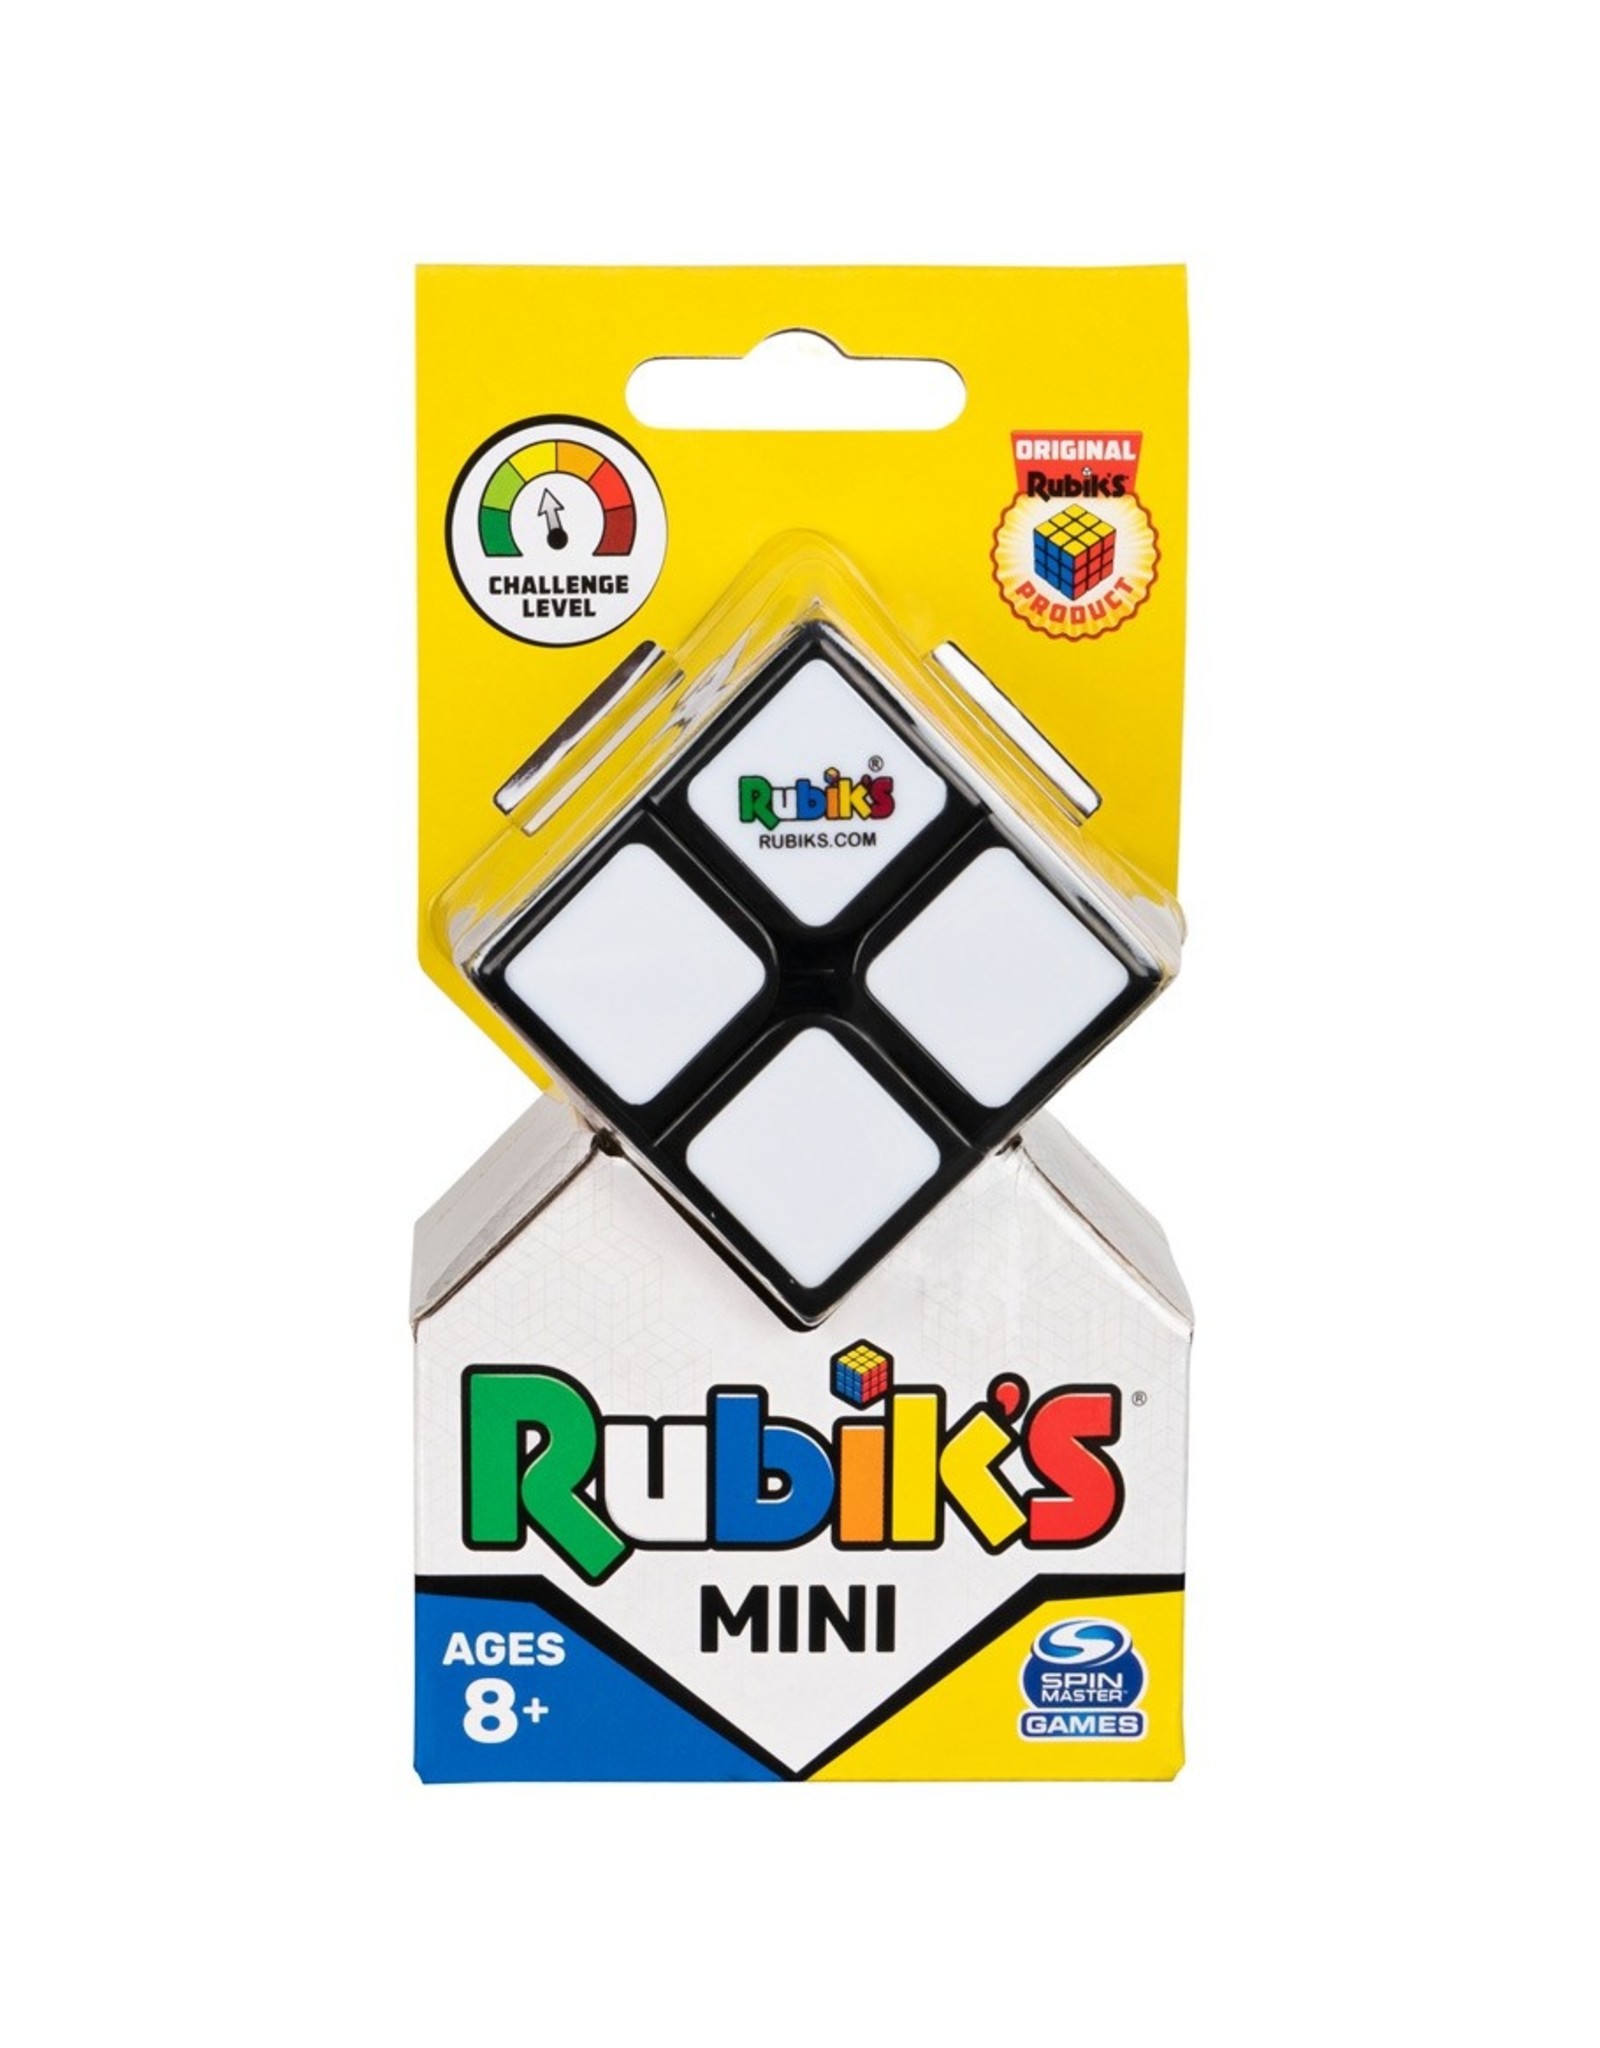 Spinmaster Rubik's 2x2 Mini